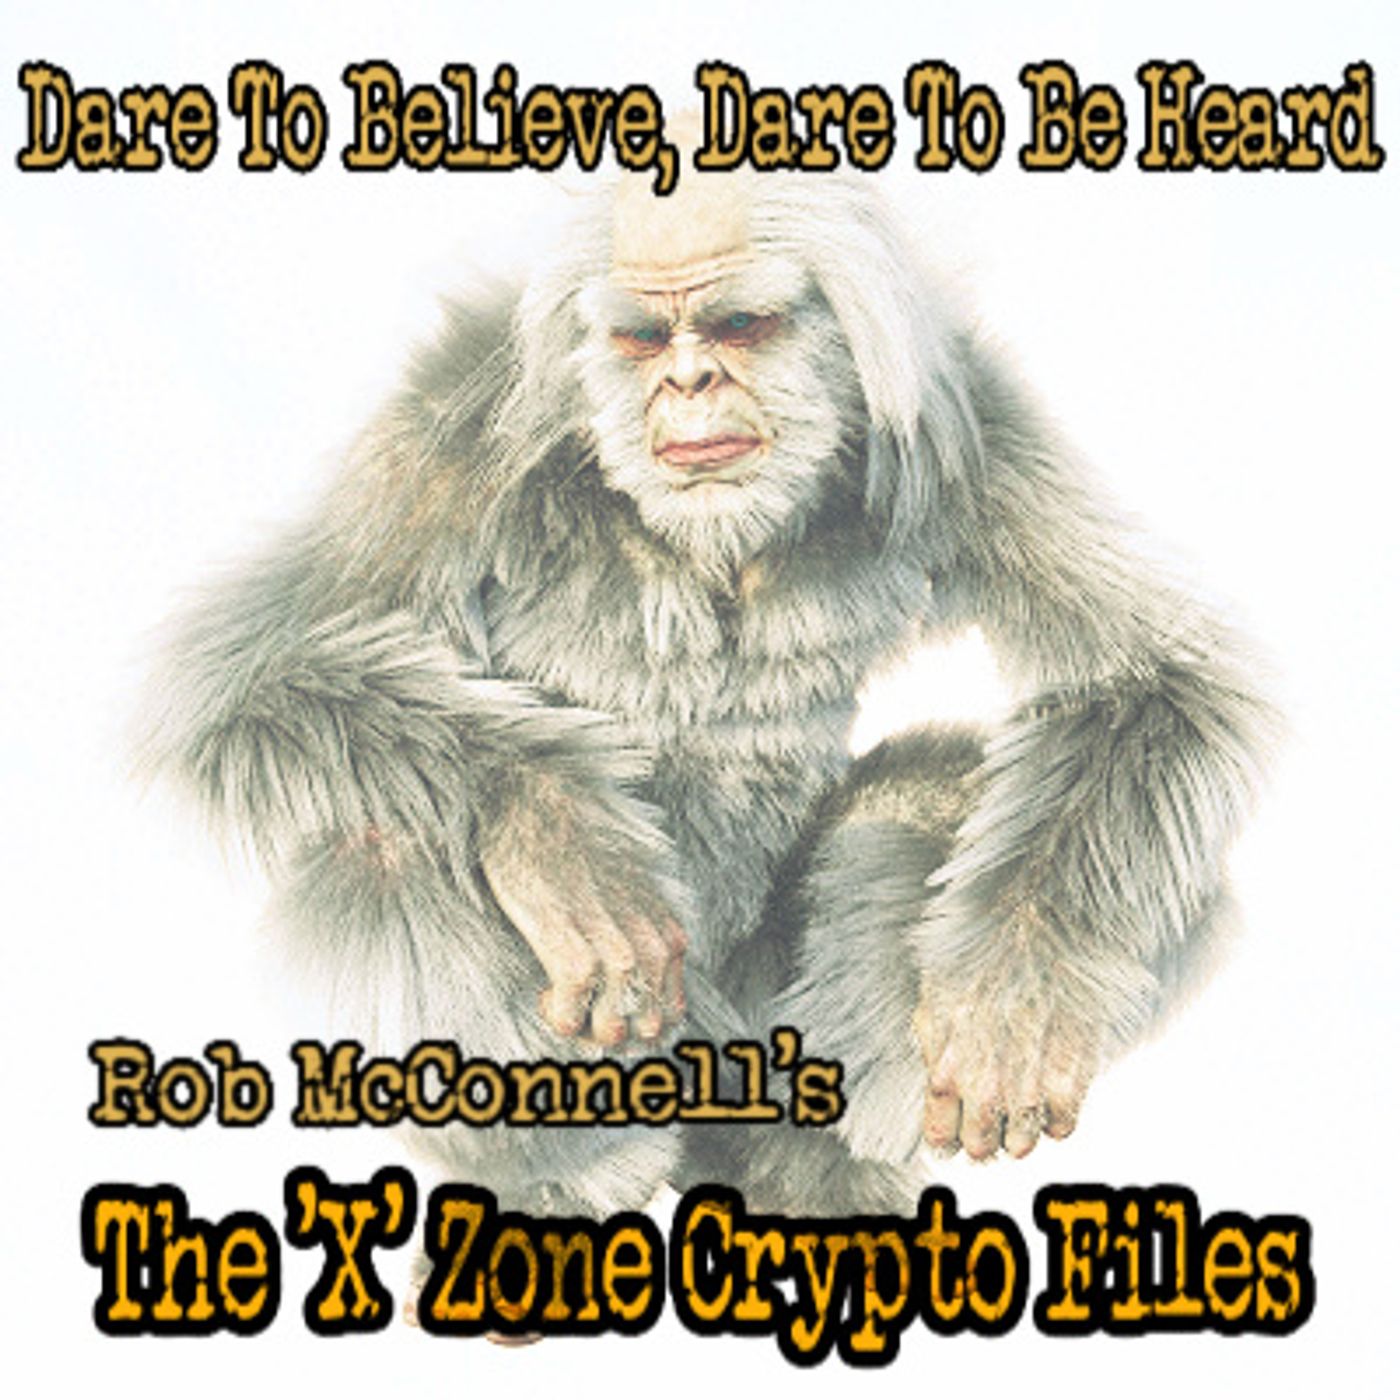 The ‘X’ Zone Crypto Files